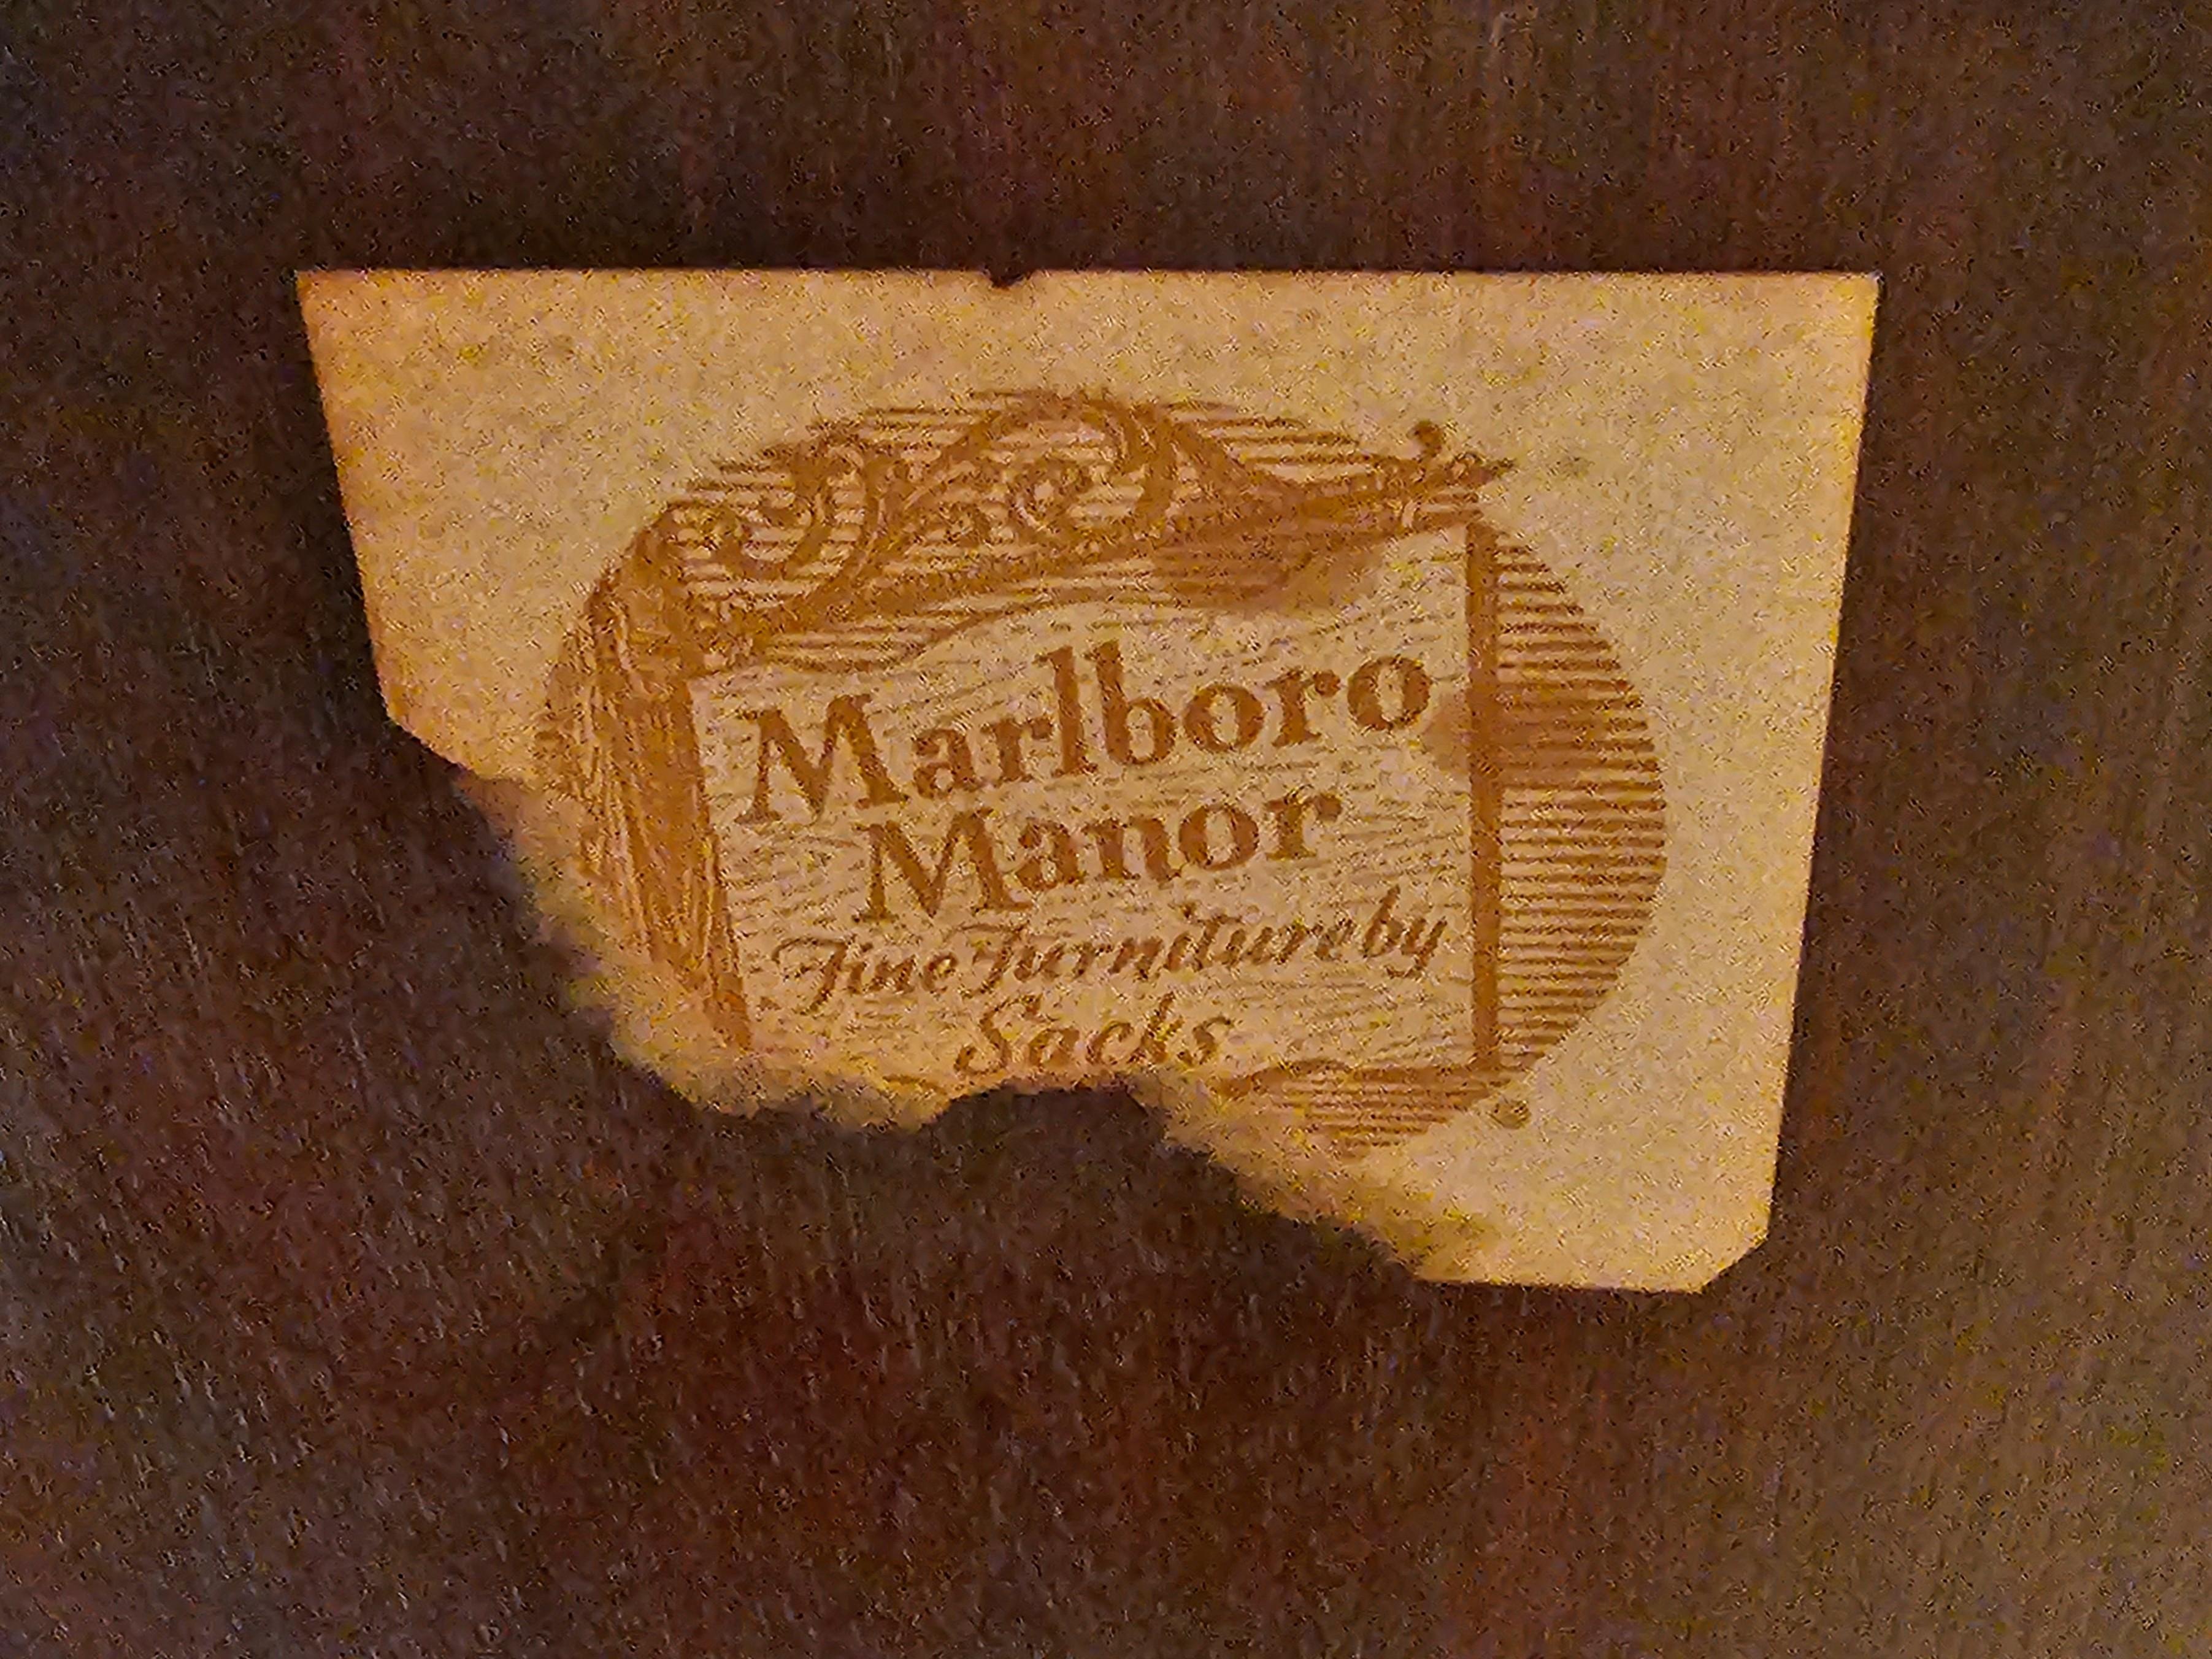 American Tiered Mahogany Drinks Trolley Dessert Server Marlboro Manor by Sacks For Sale 8